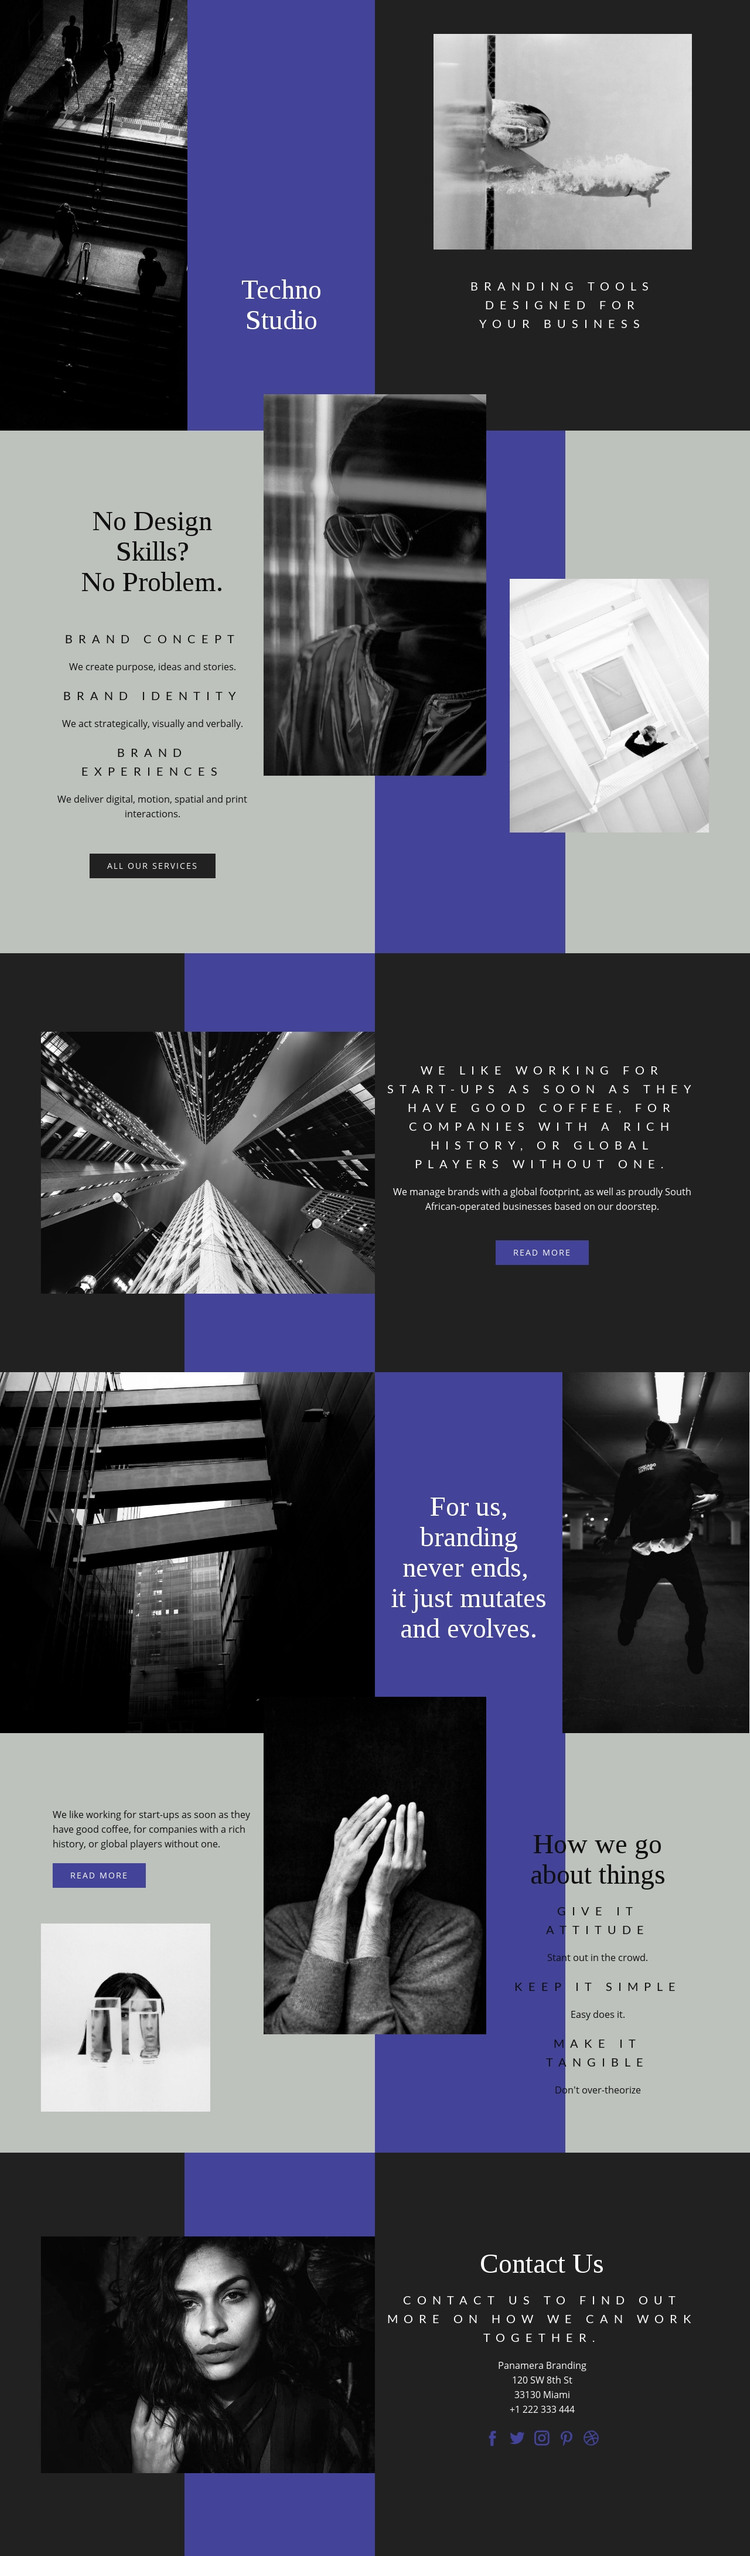 Techno skills in business Homepage Design